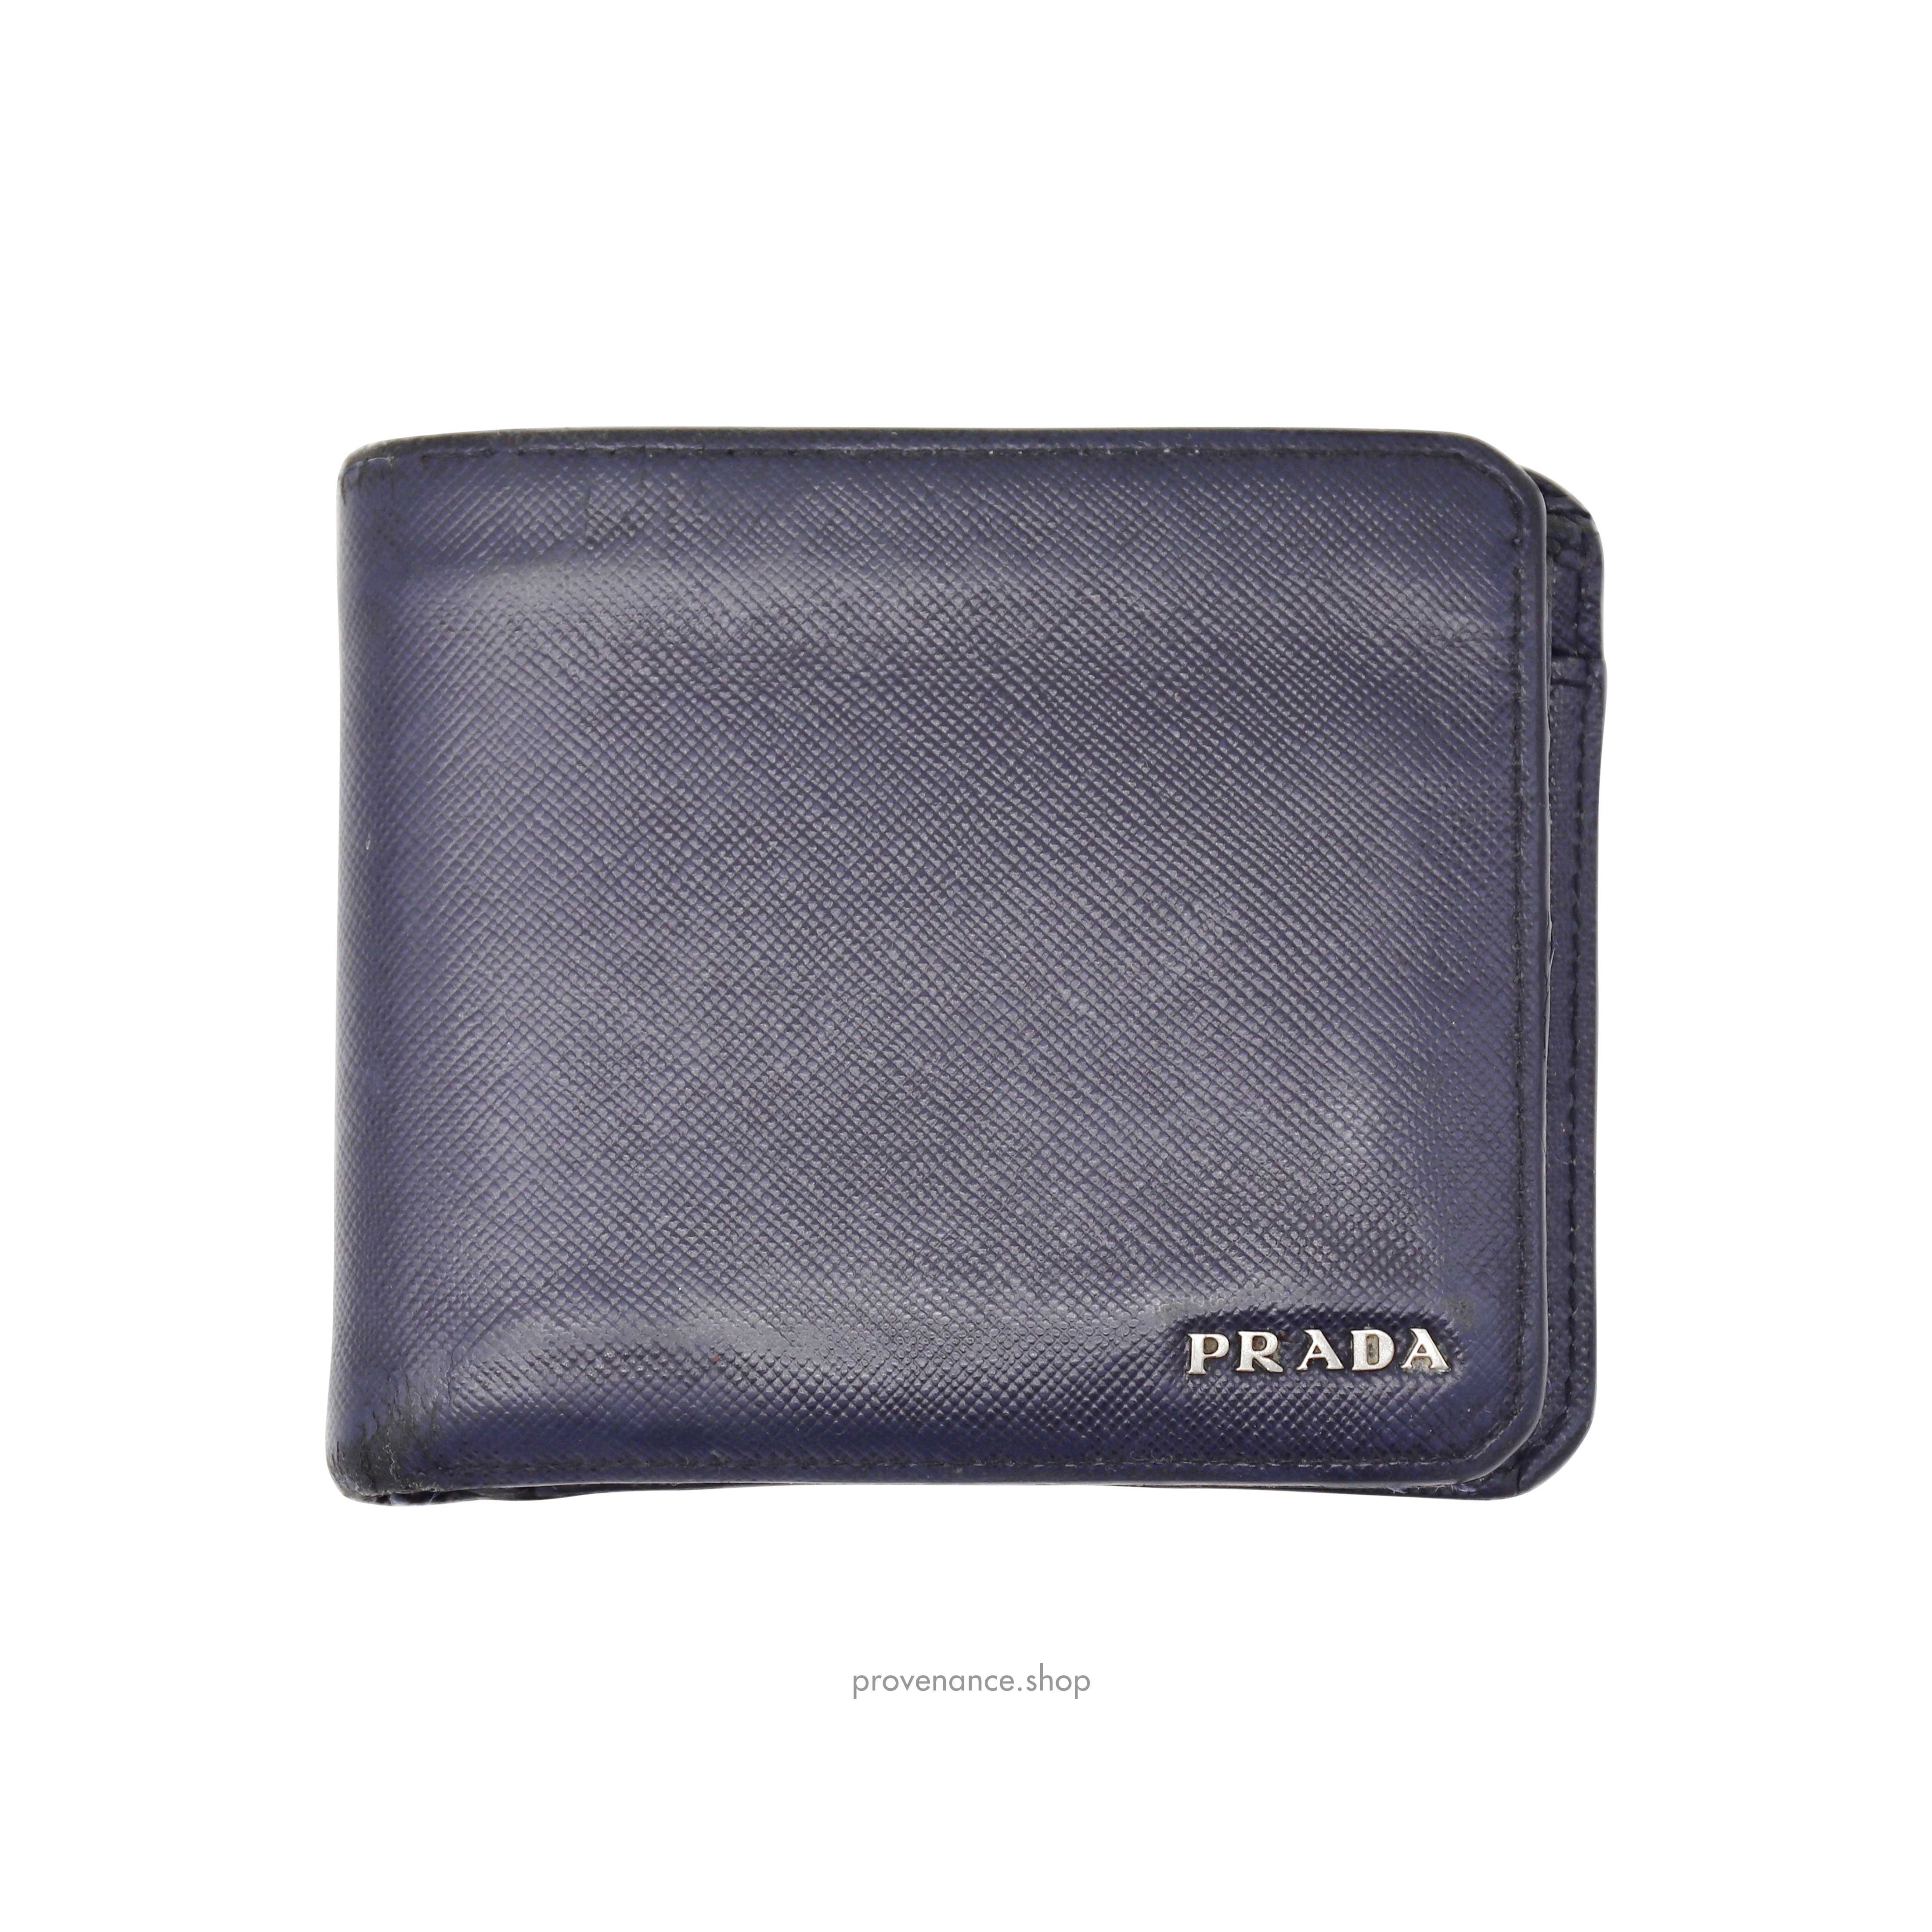 Prada Bifold Wallet - Navy Saffiano Leather - 1